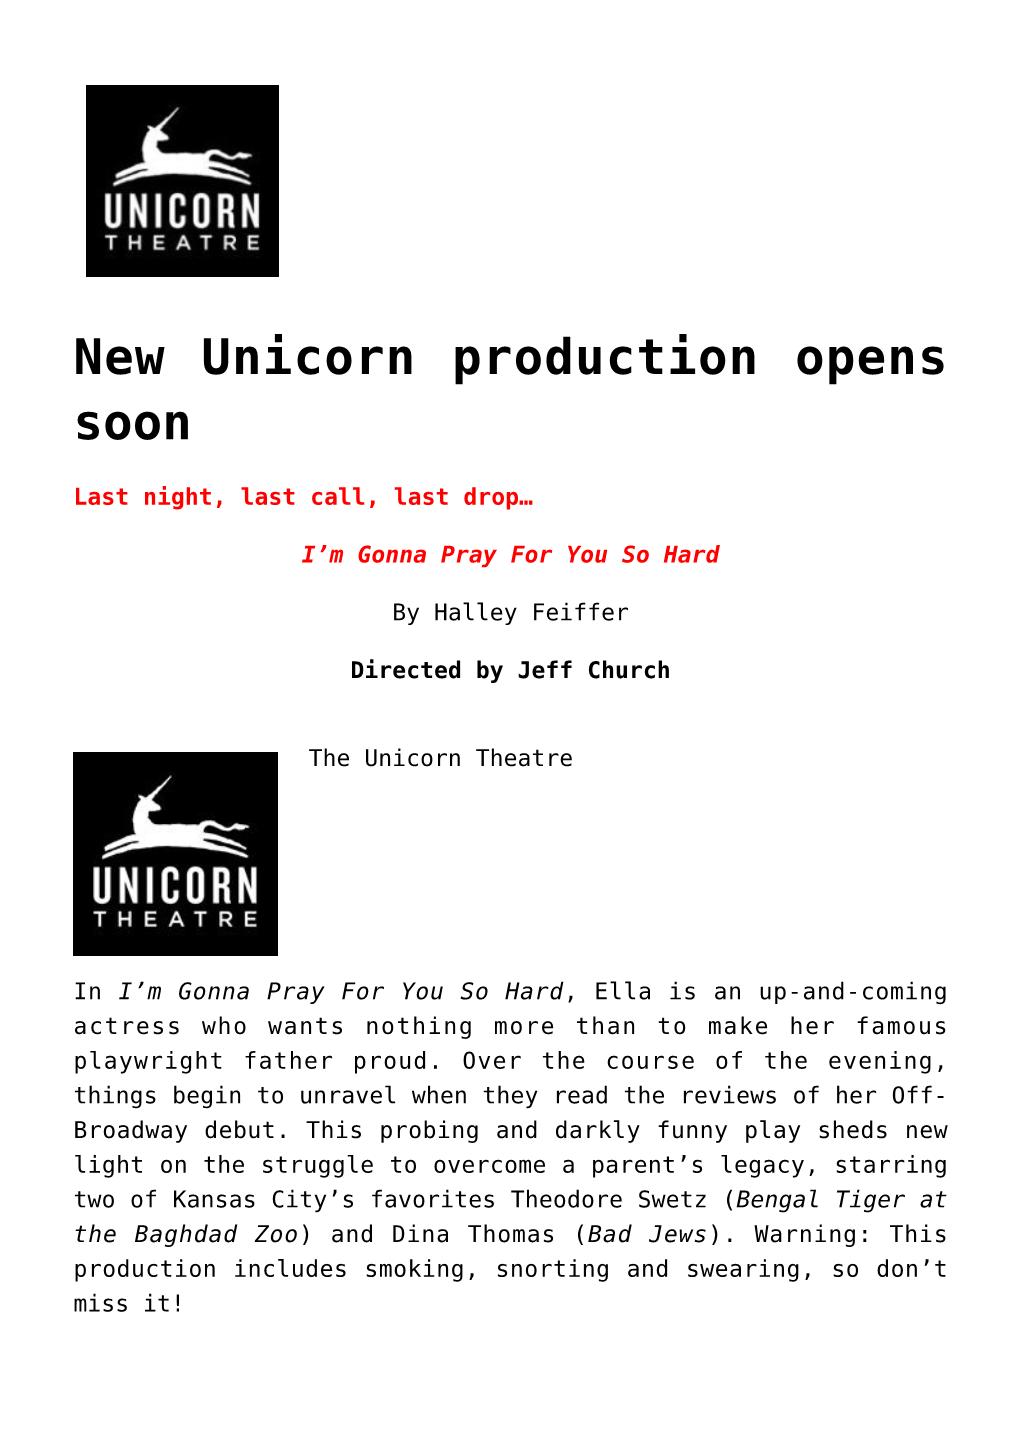 New Unicorn Production Opens Soon